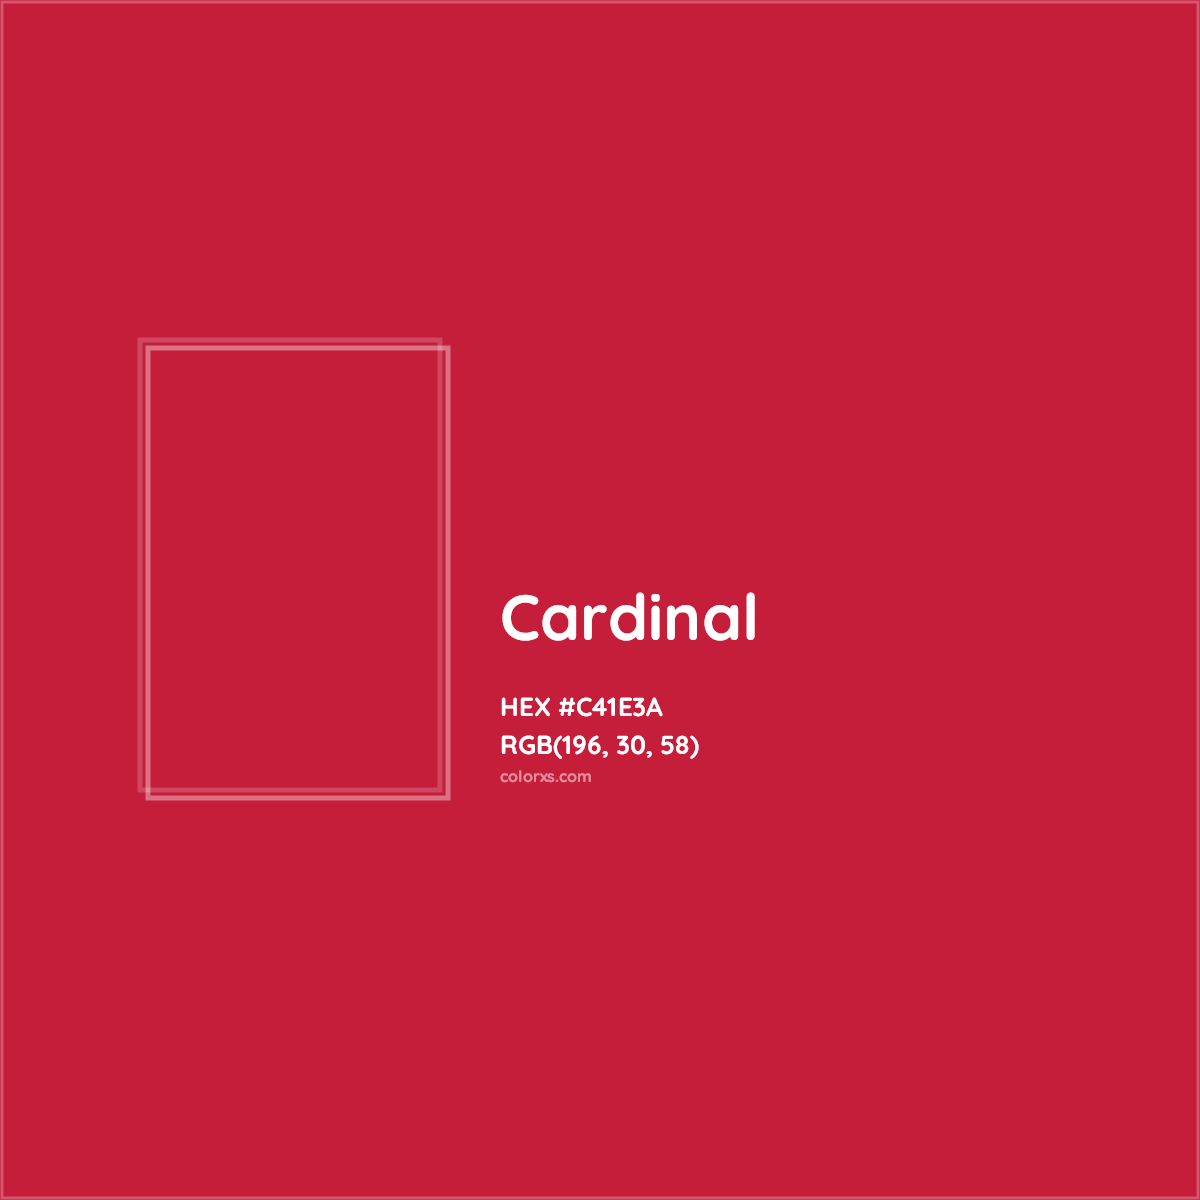 HEX #C41E3A Cardinal Color - Color Code